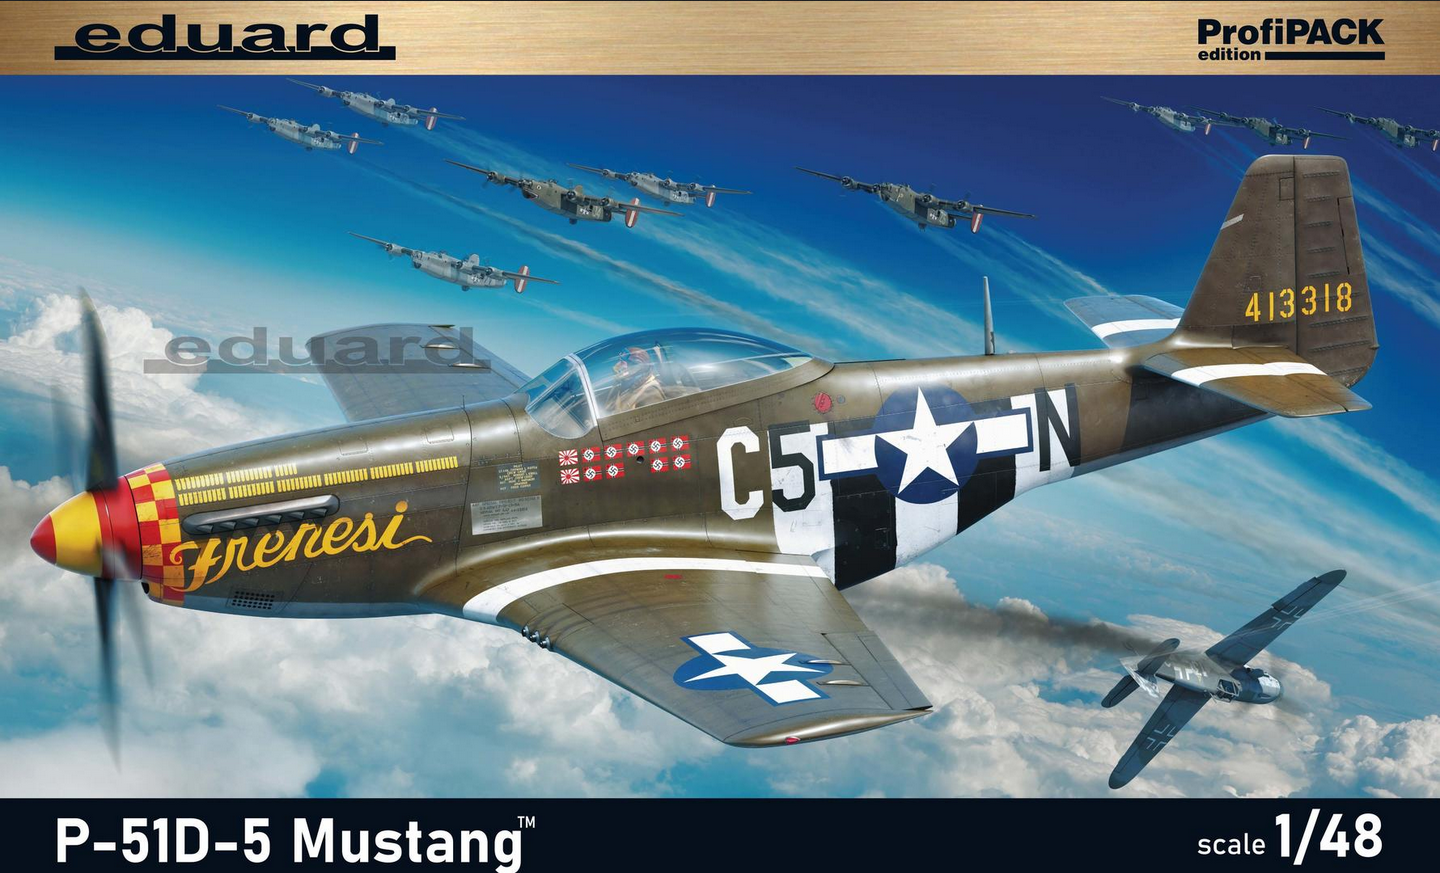 P-51D-5 Mustang - ProfiPACK Edition - EDUARD 1/48